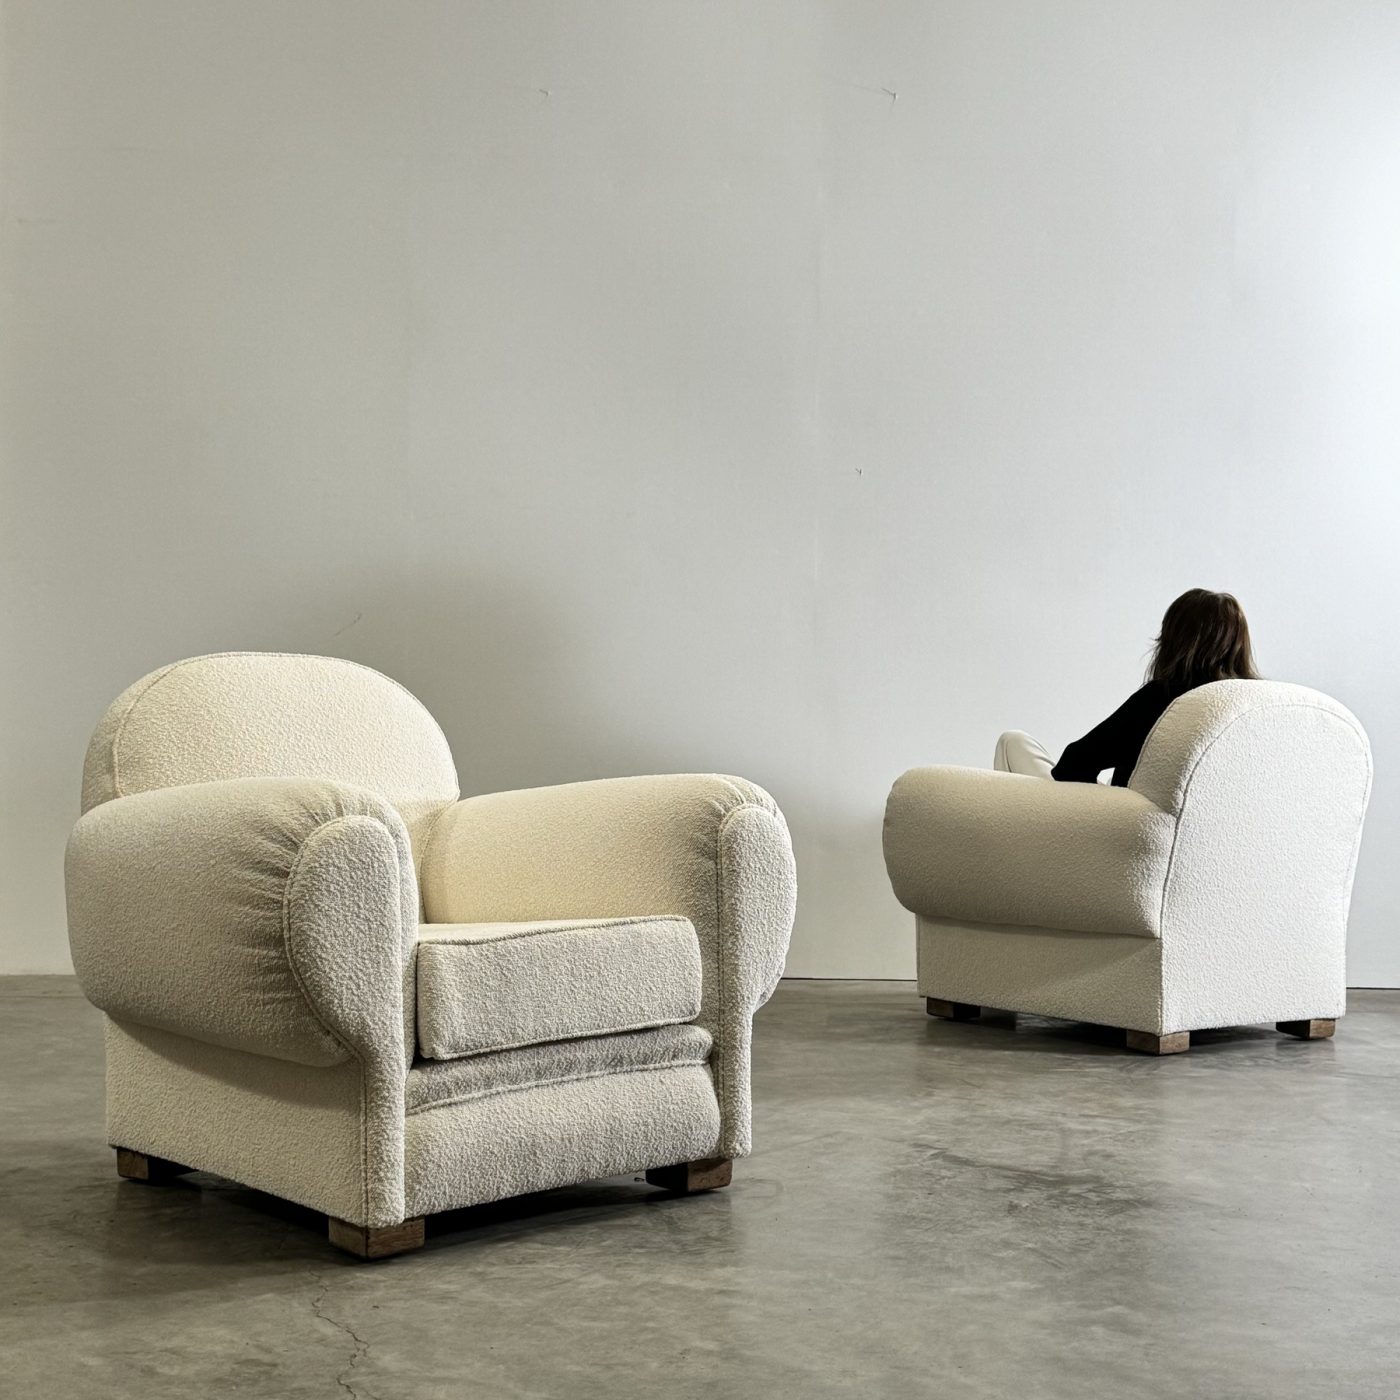 objet-vagabond-club-armchairs0001